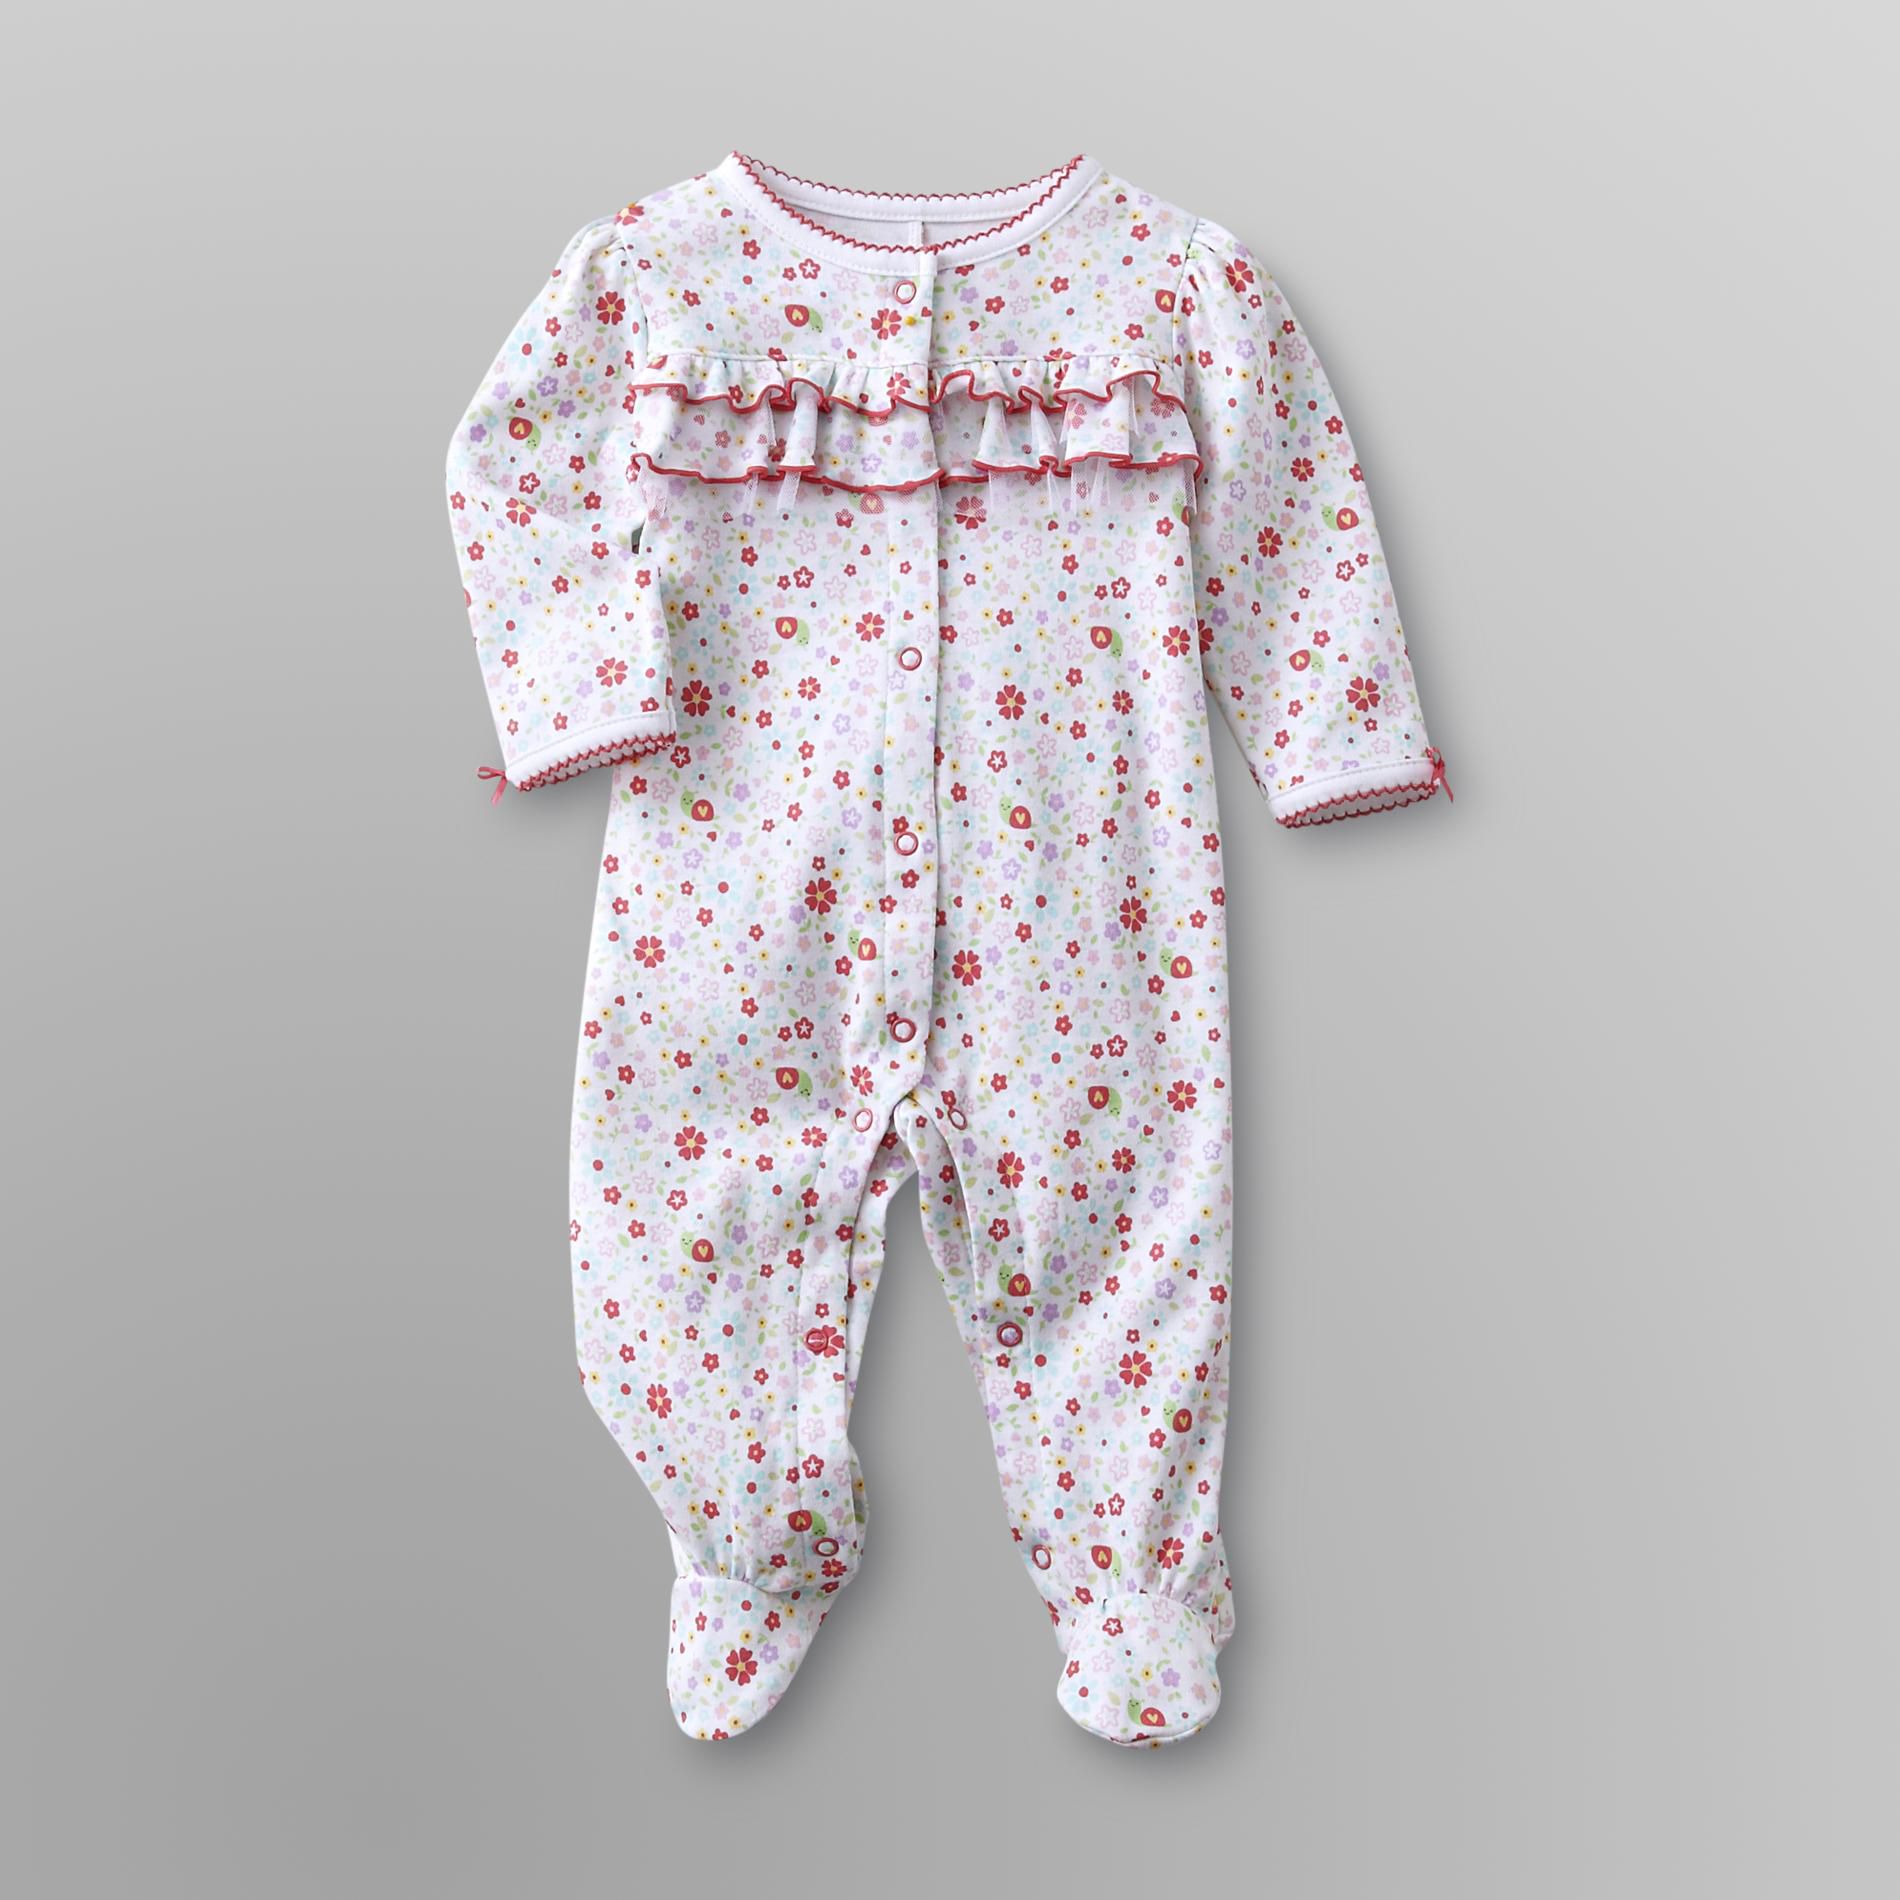 Little Wonders Newborn Girl's Sleeper Pajamas - Flowers